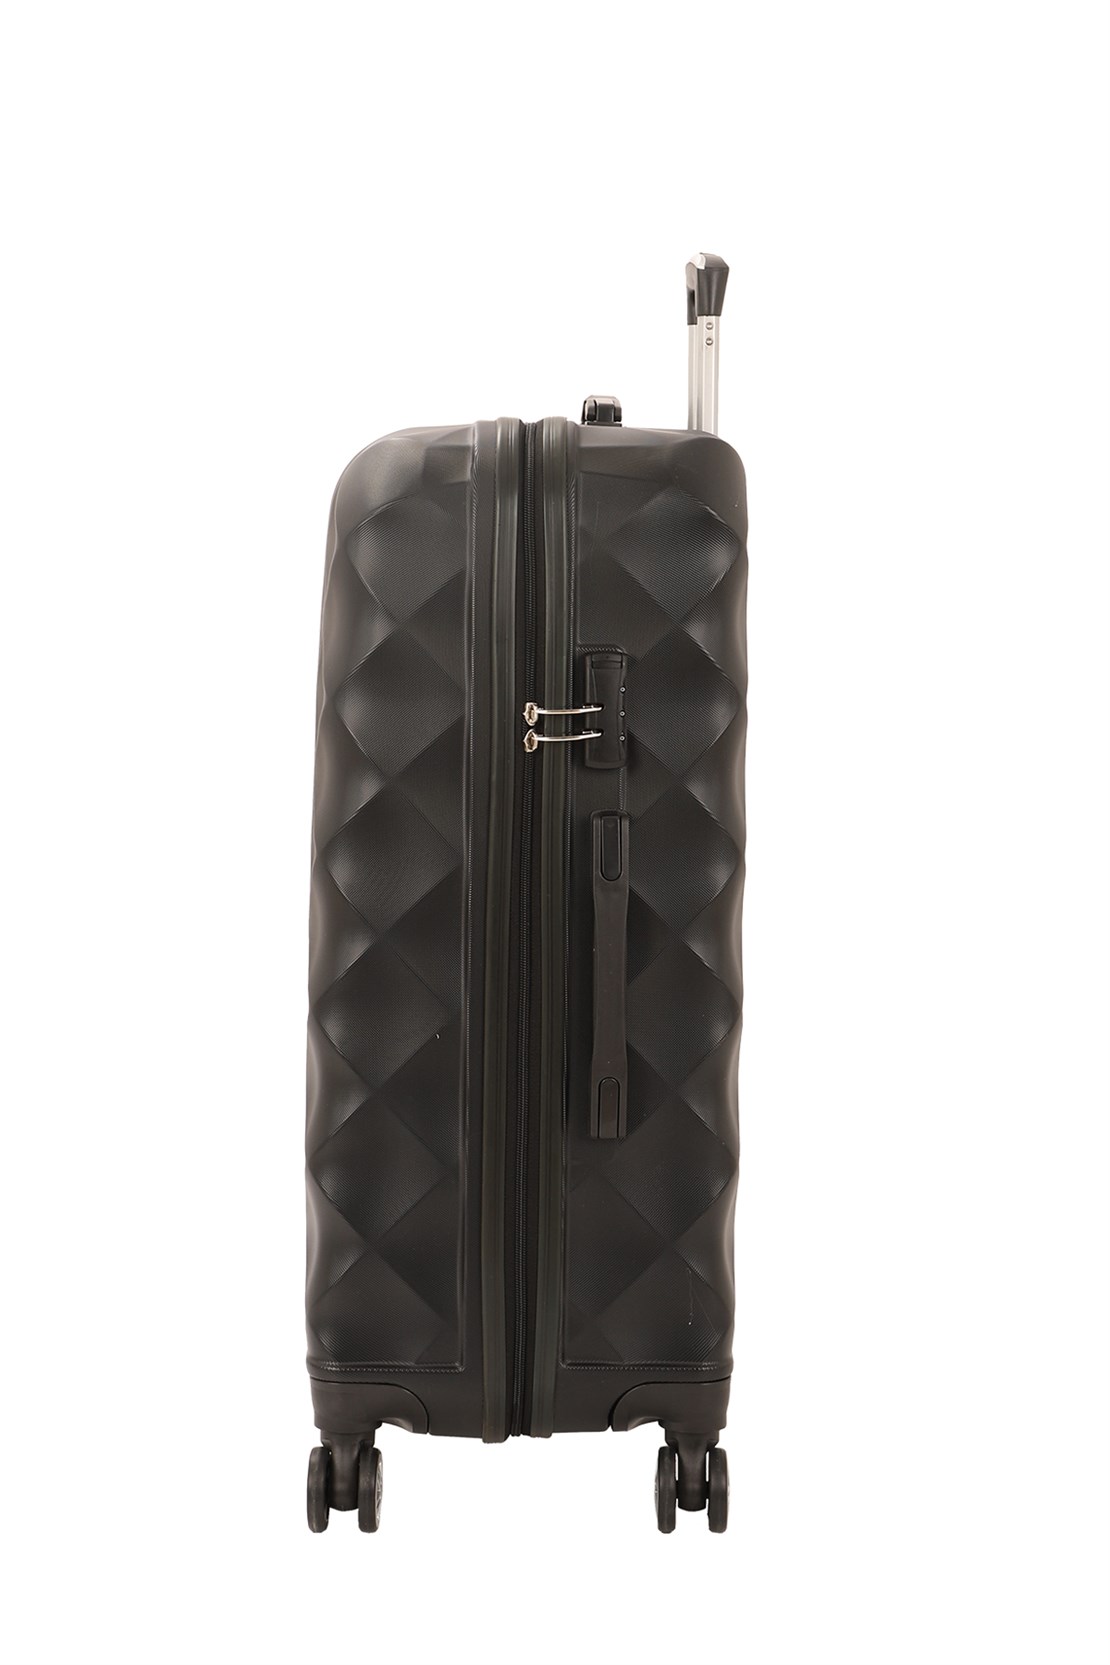 БОЛЬШОЙ ЧЕМОДАН MCS V359 L BLACK PREMIUM НА 4-Х КАУЧУКОВЫХ КОЛЕСАХ!Для багажа,до 23 кг - 3